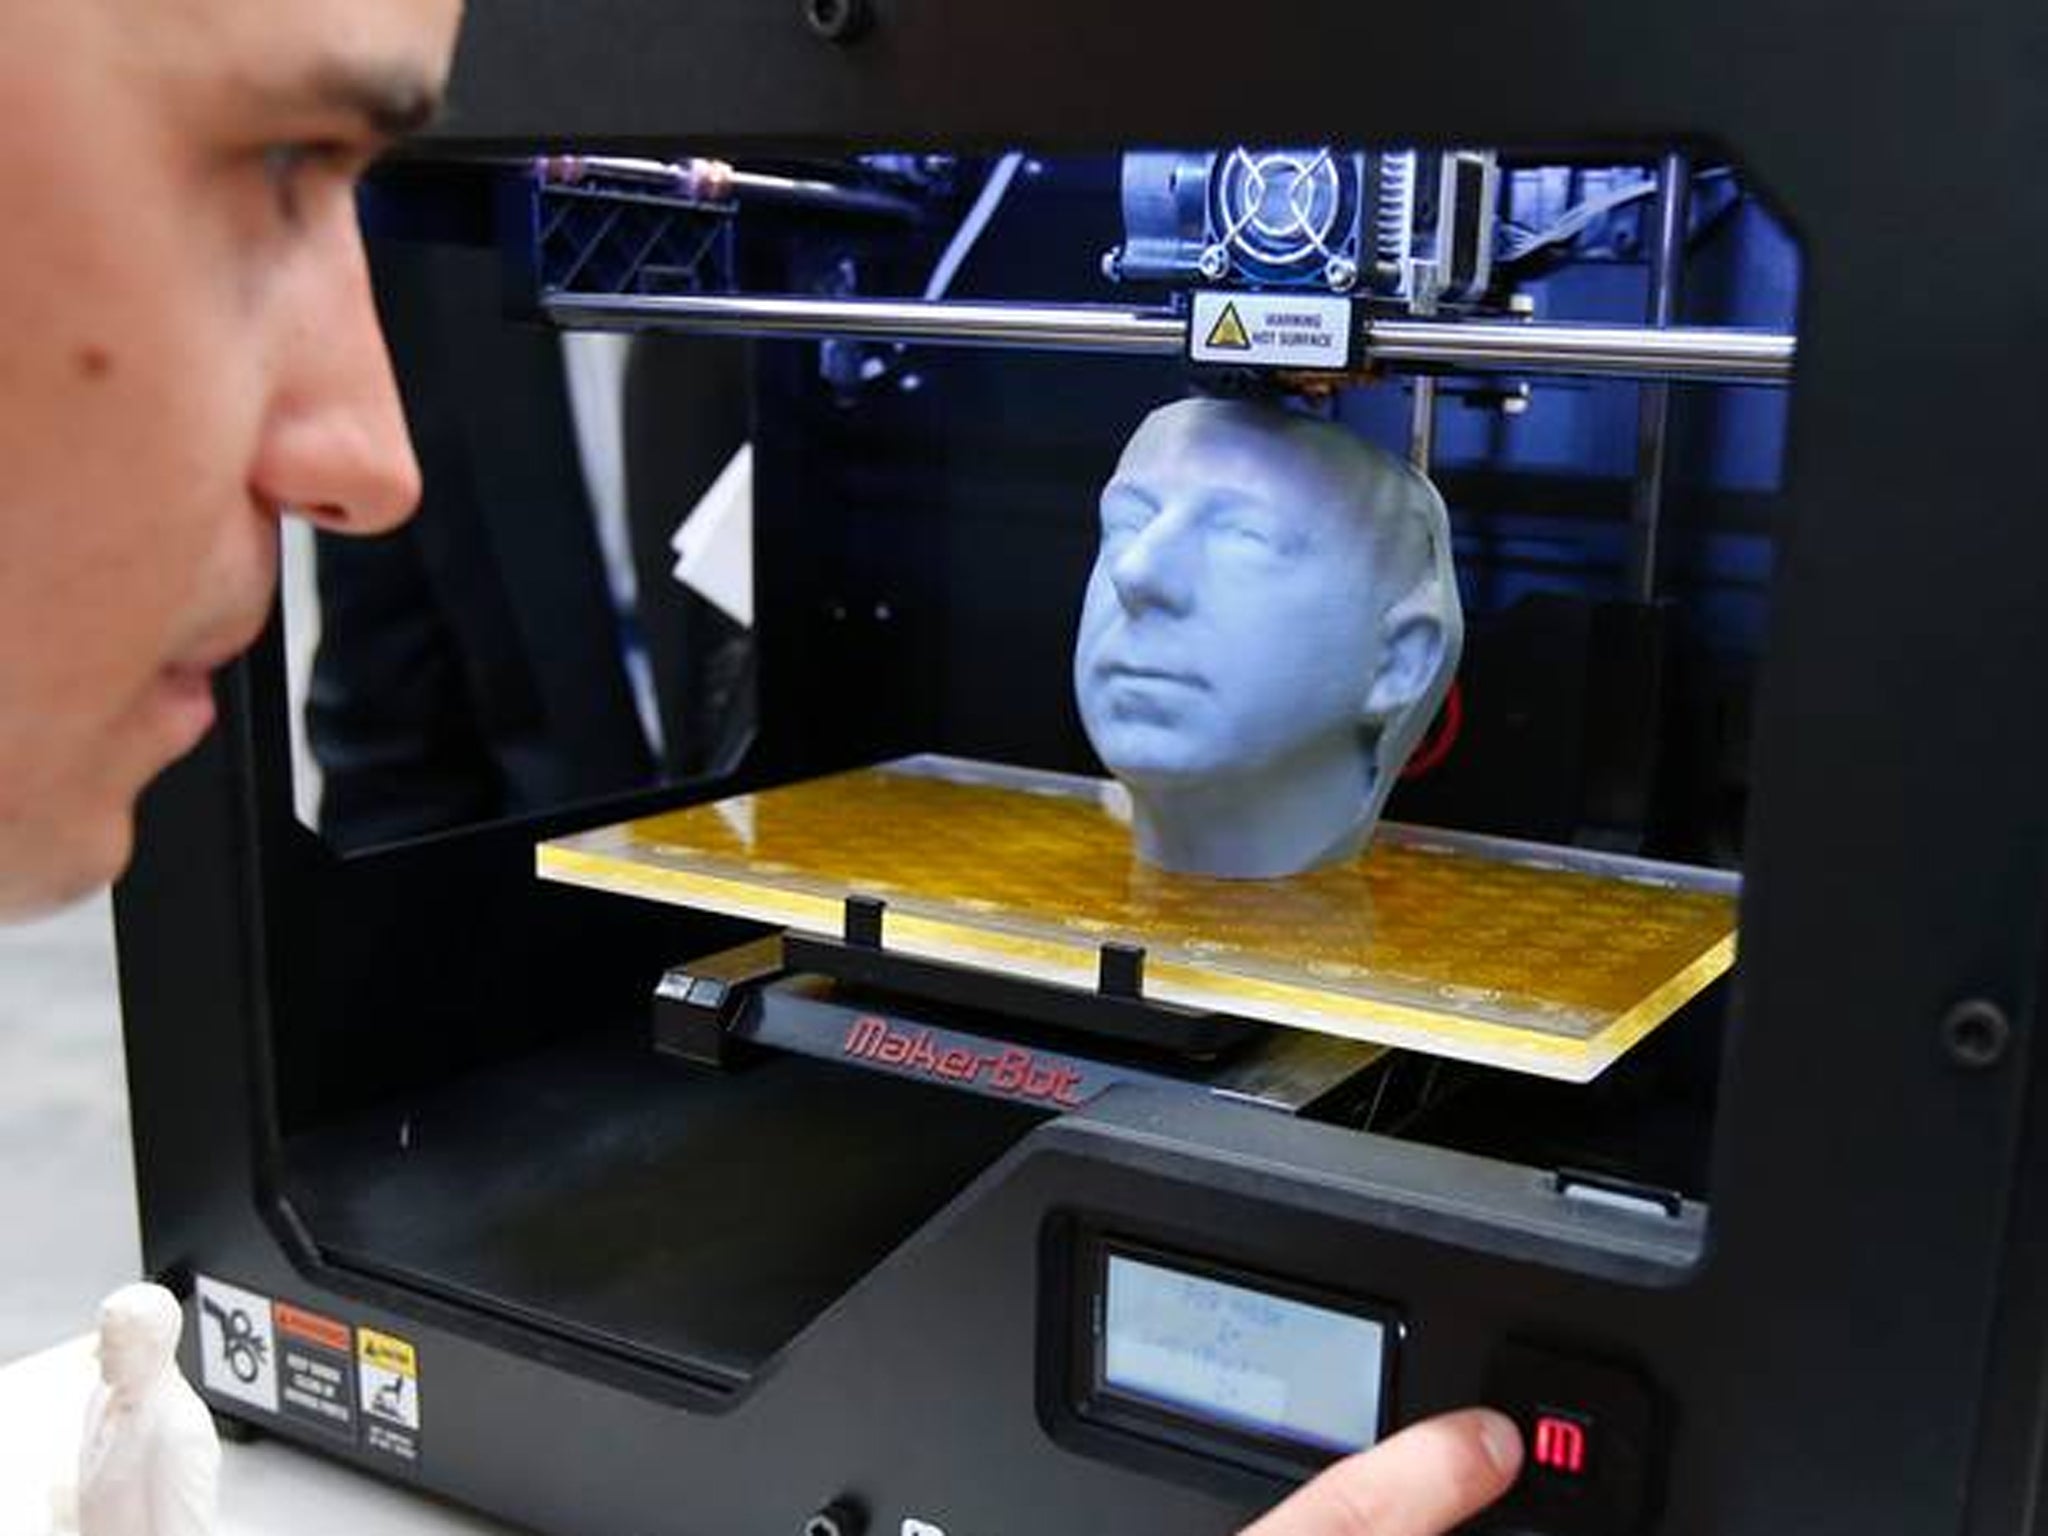 Manuel Leute poses for the media as he uses the 3D printer MakerBot Replicator